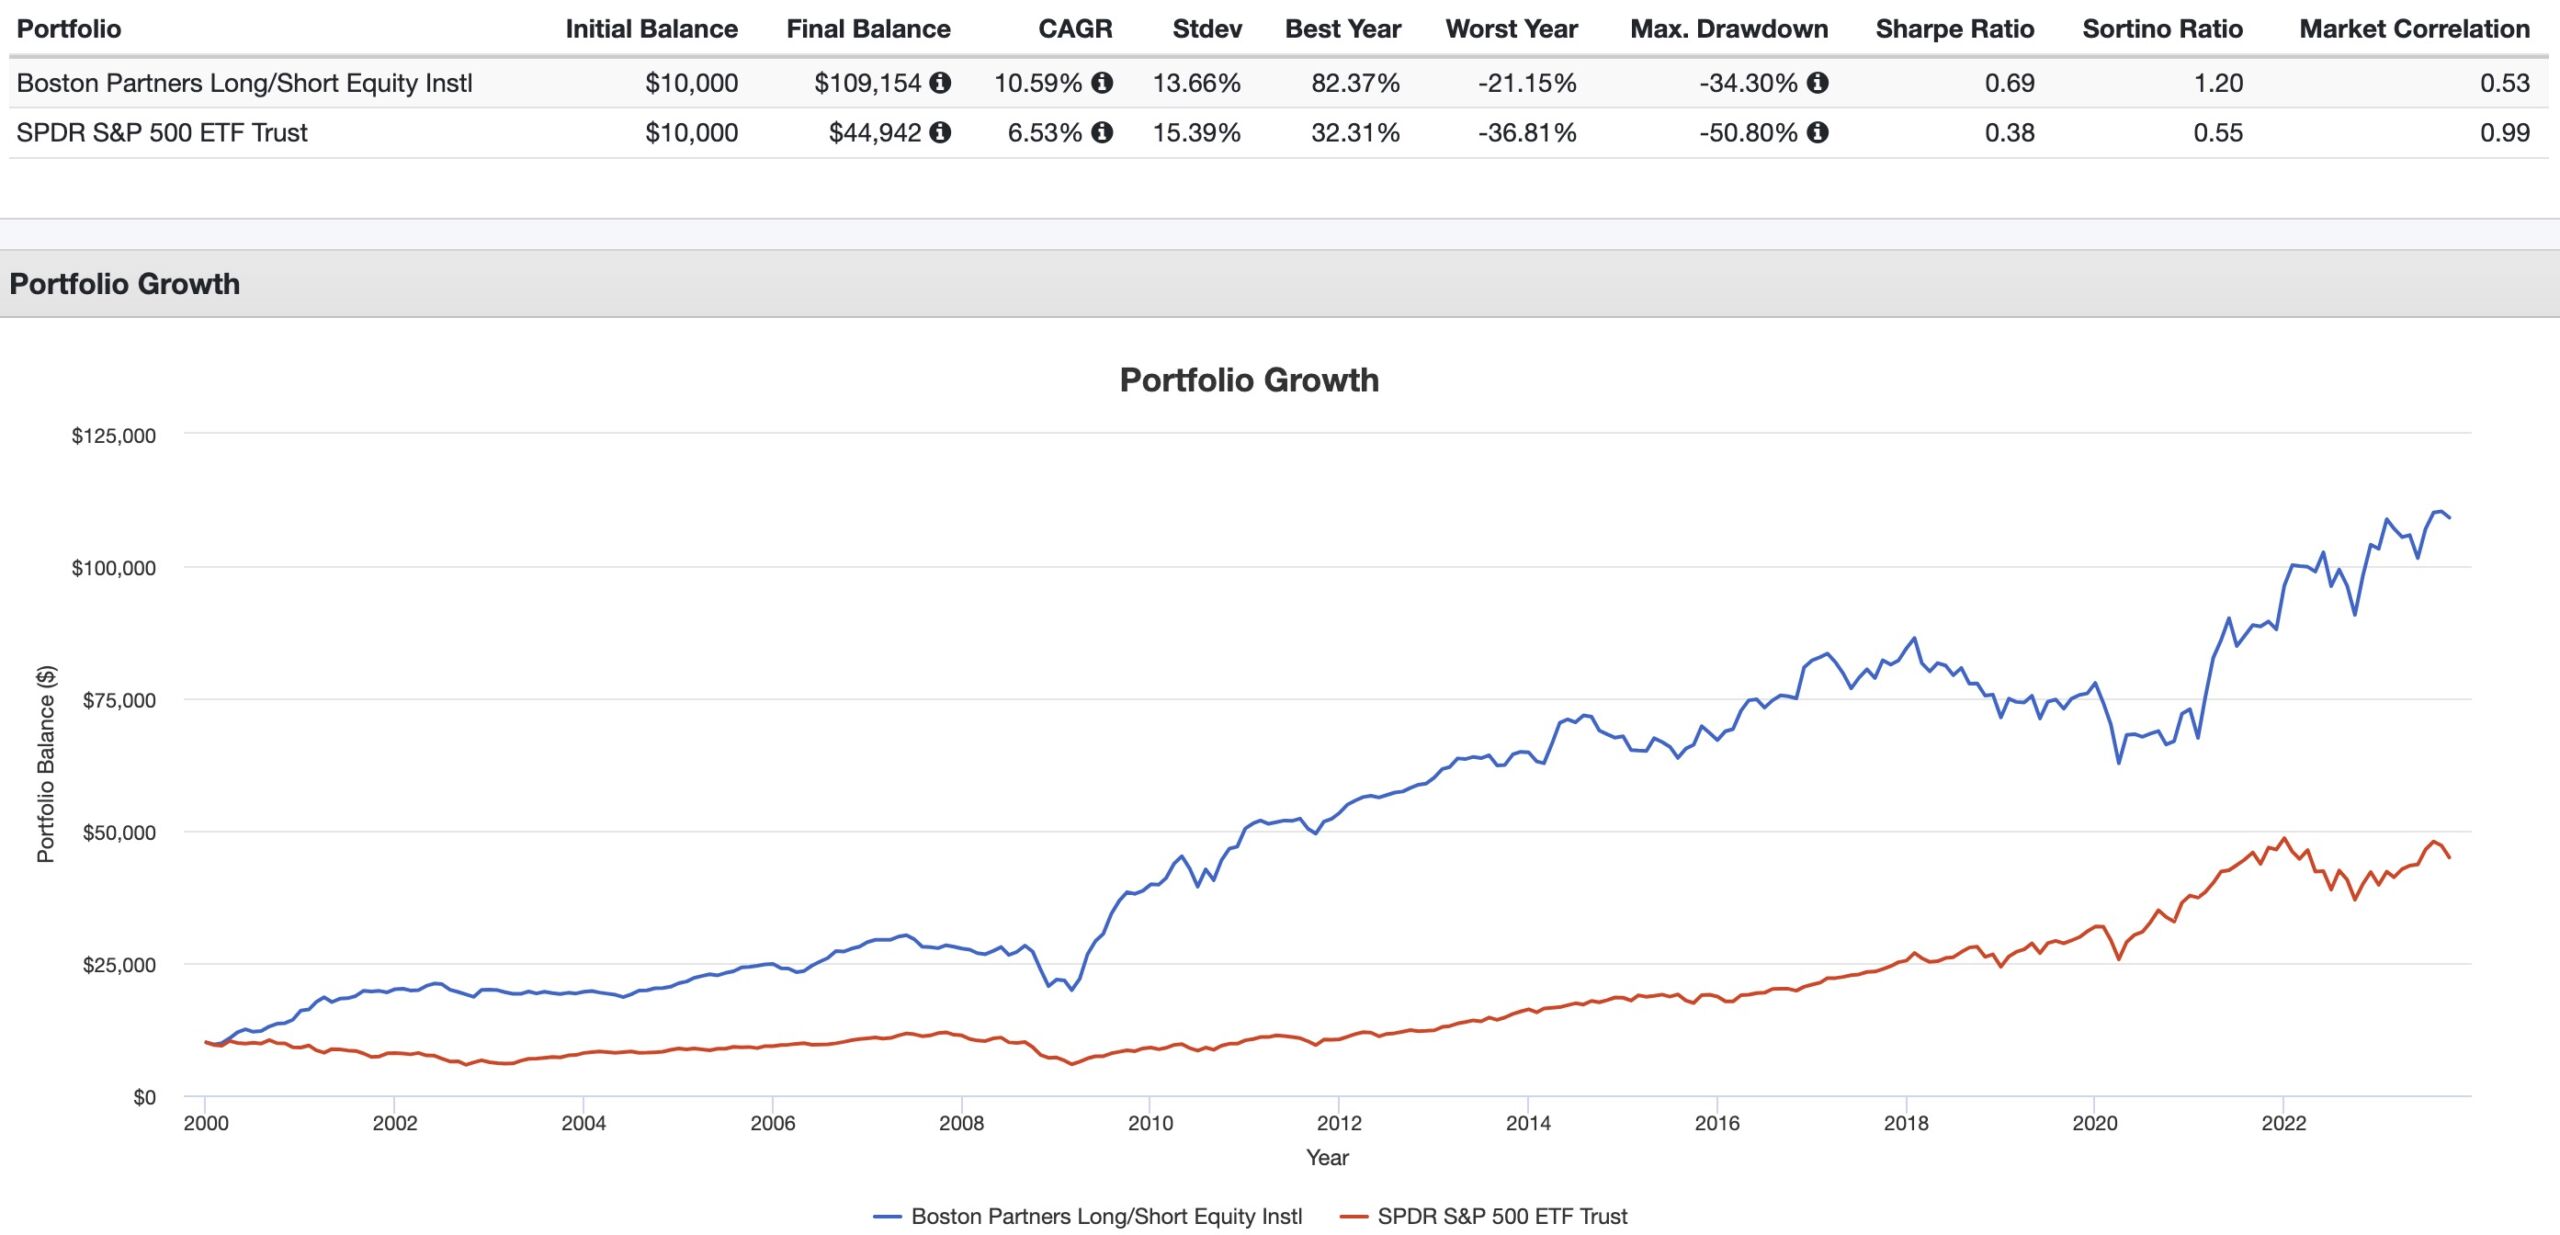 BPSLX vs SPY Portfolio Performance: Boston Partners Long/Short Equity vs S&P 500 